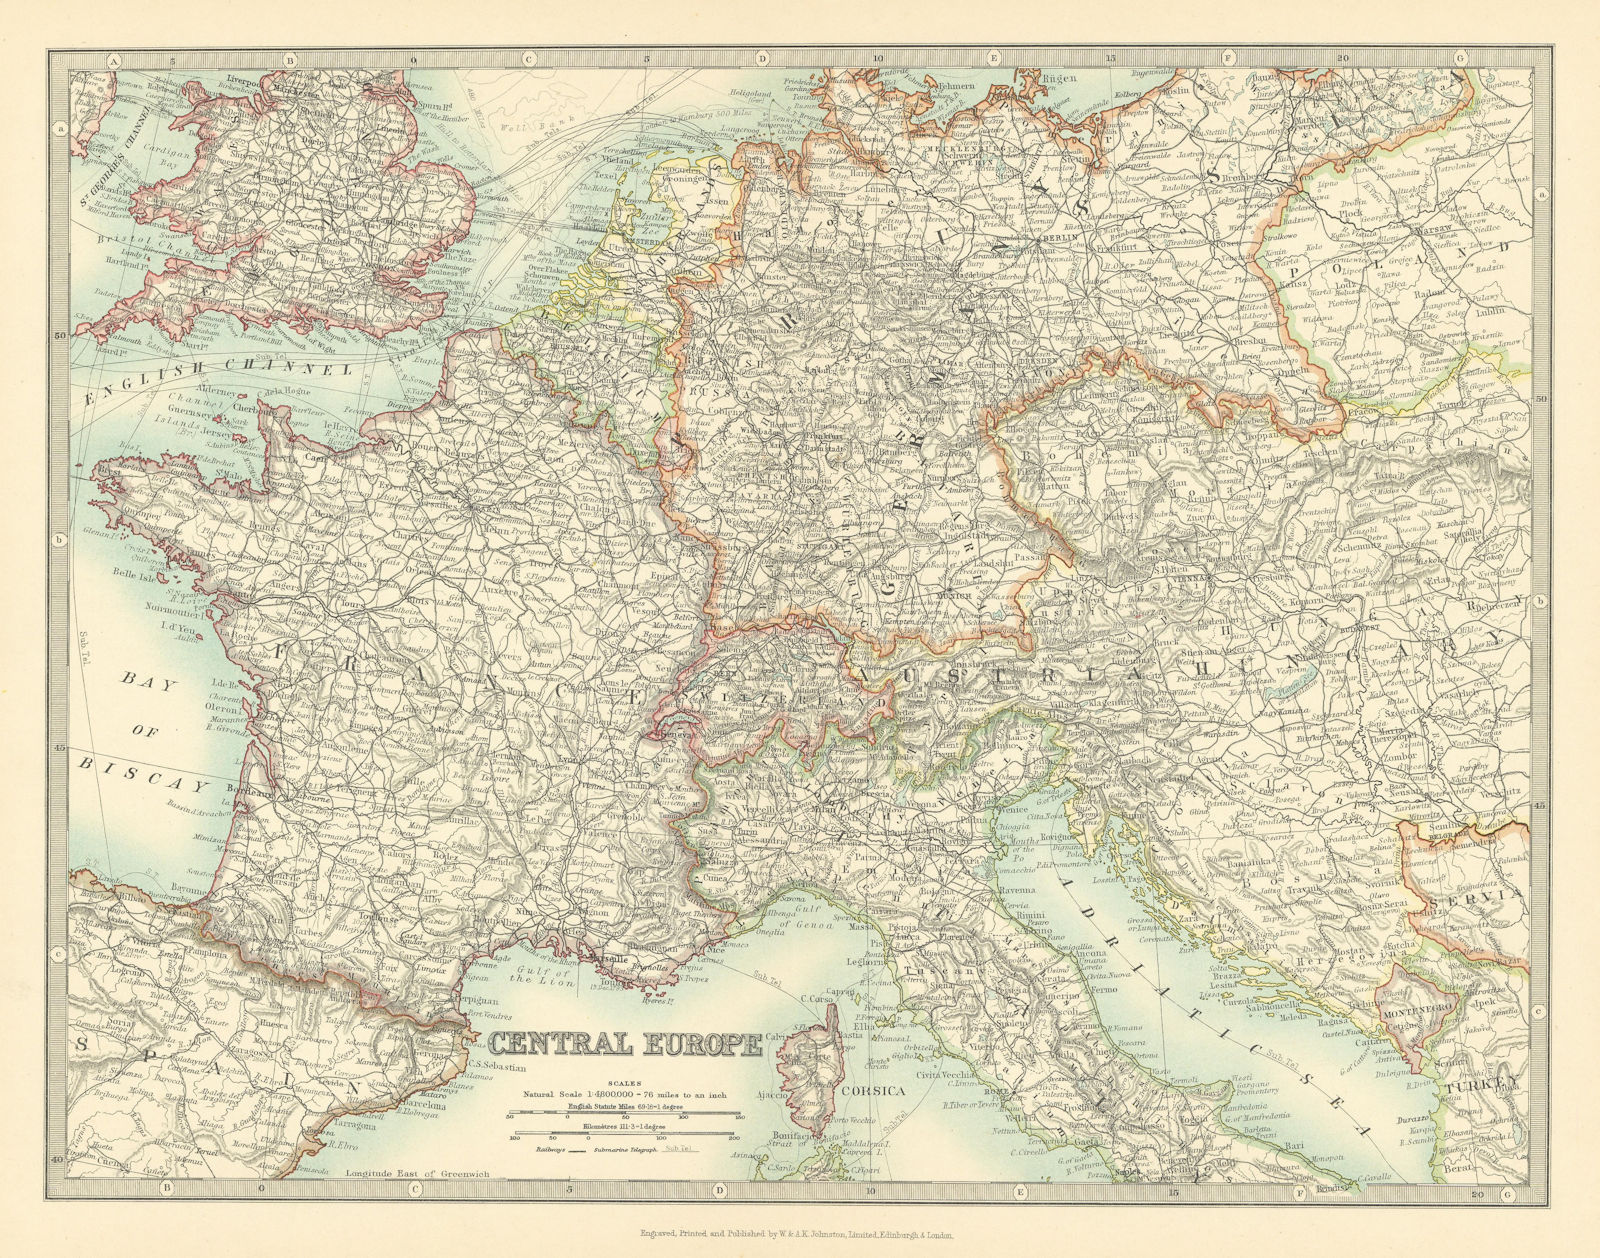 Associate Product CENTRAL EUROPE. France w/o Alsace Lorraine. Austria-Hungary . JOHNSTON 1911 map